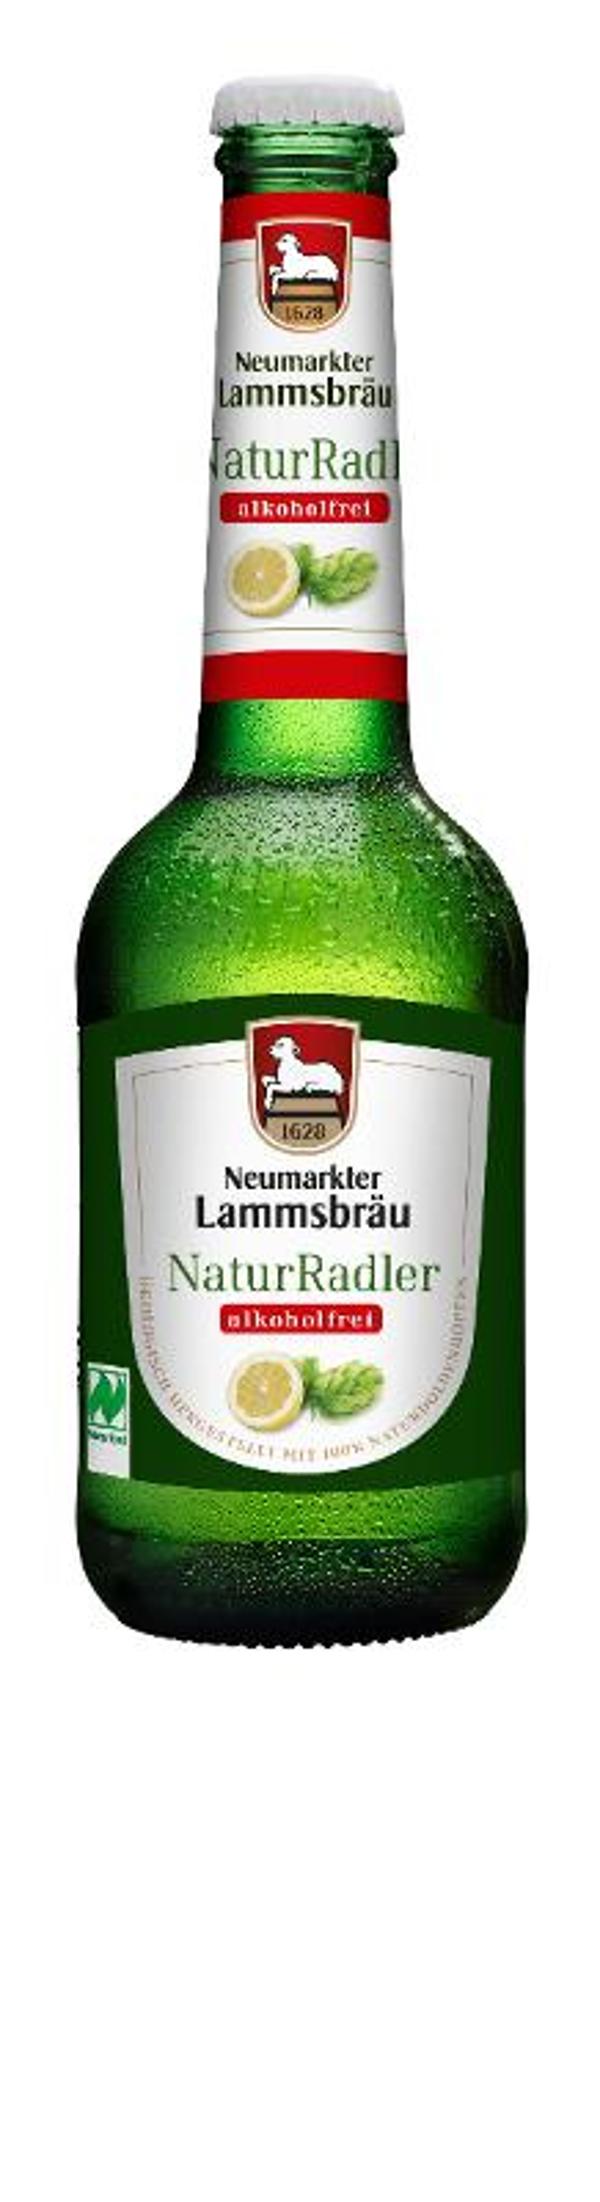 Produktfoto zu Lammsbräu - NaturRadler, alkoholfrei, MHD April